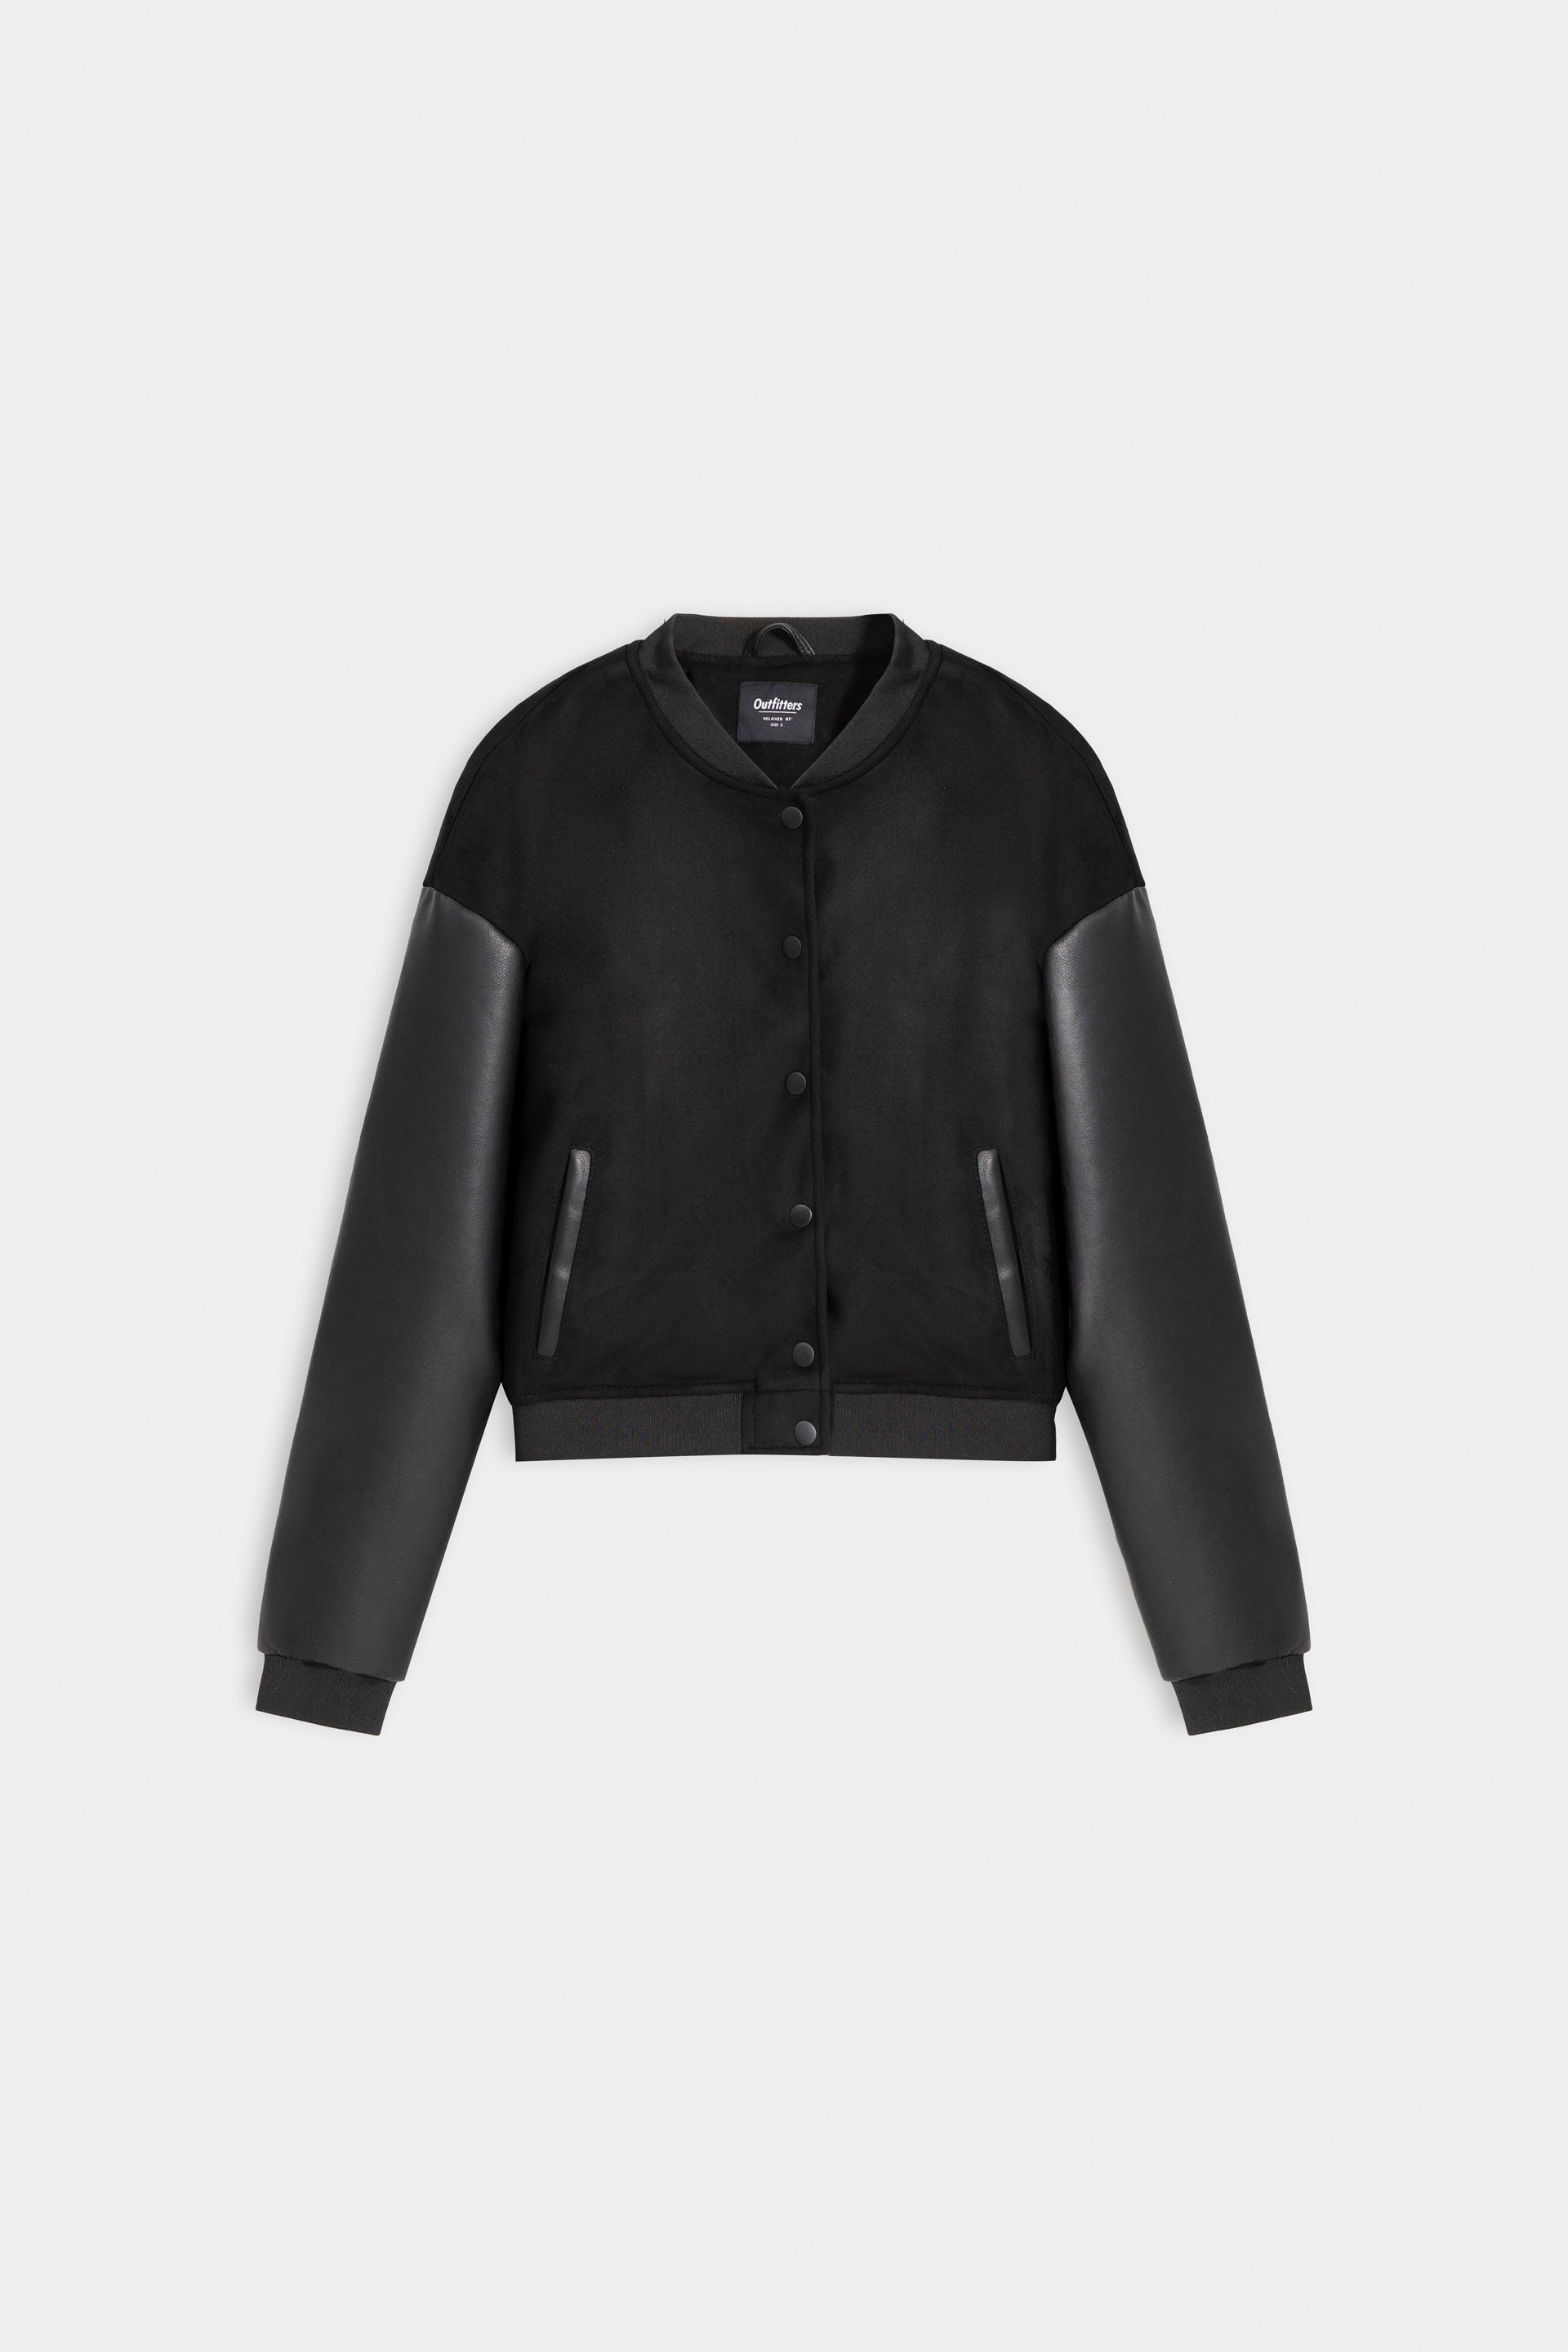 wool & faux leather jacket